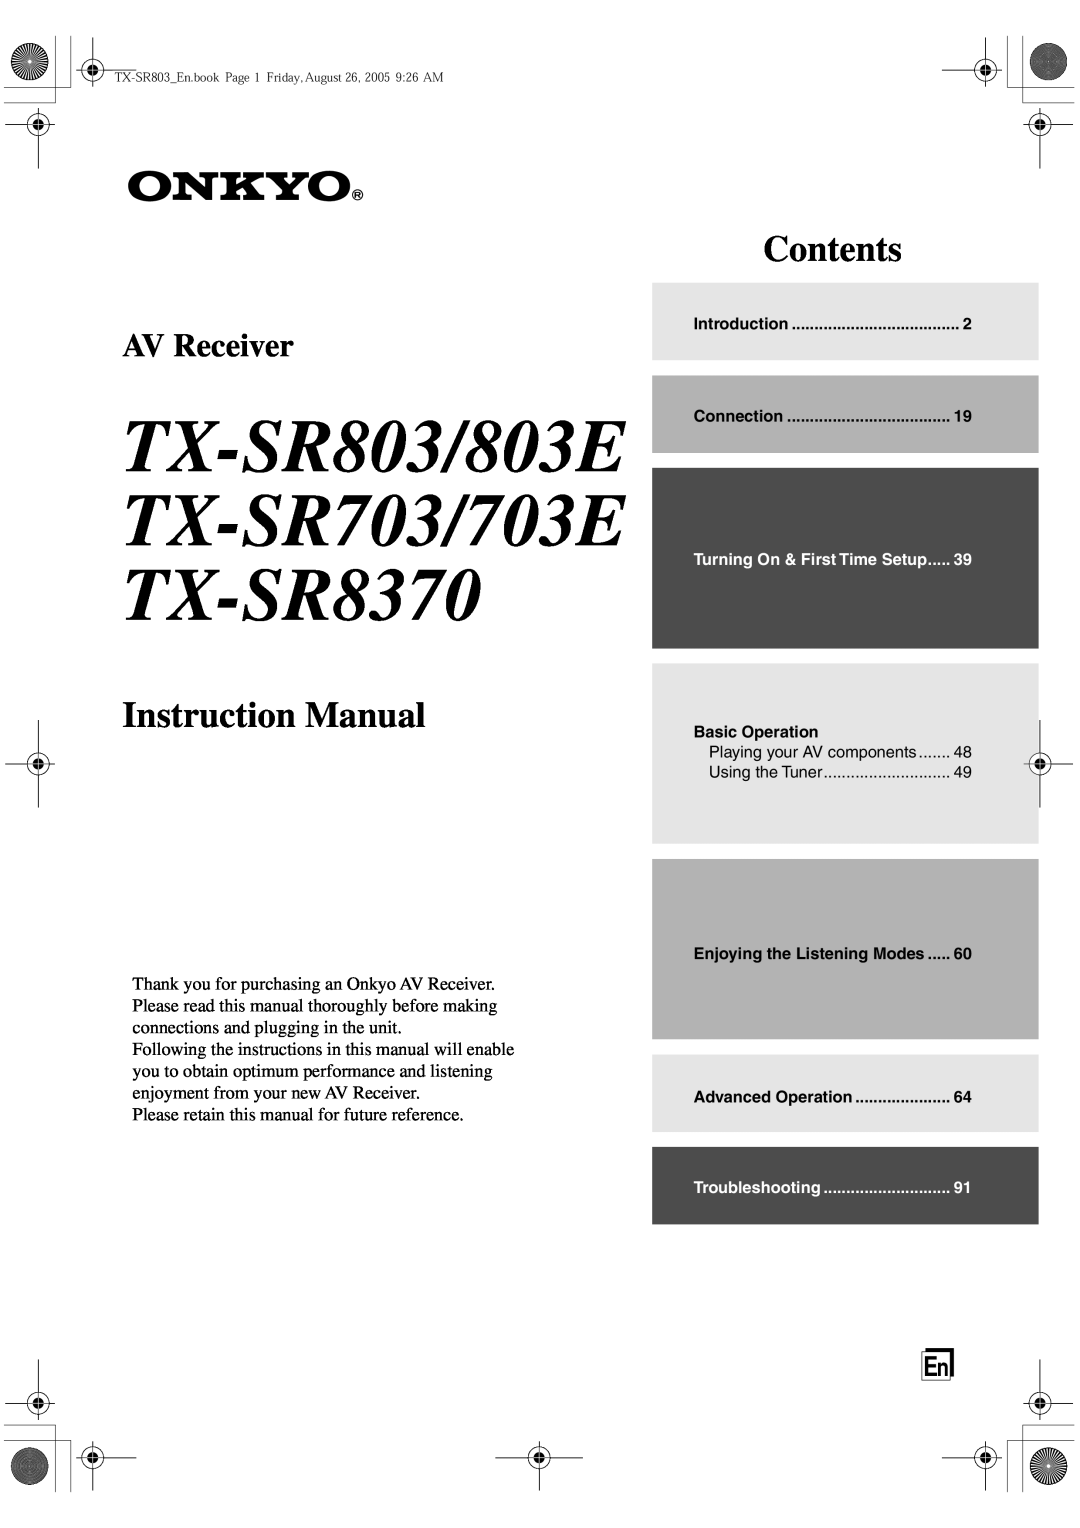 Onkyo TX-SR703E instruction manual TX-SR803/803E TX-SR703/703E TX-SR8370, Instruction Manual, Contents, AV Receiver 